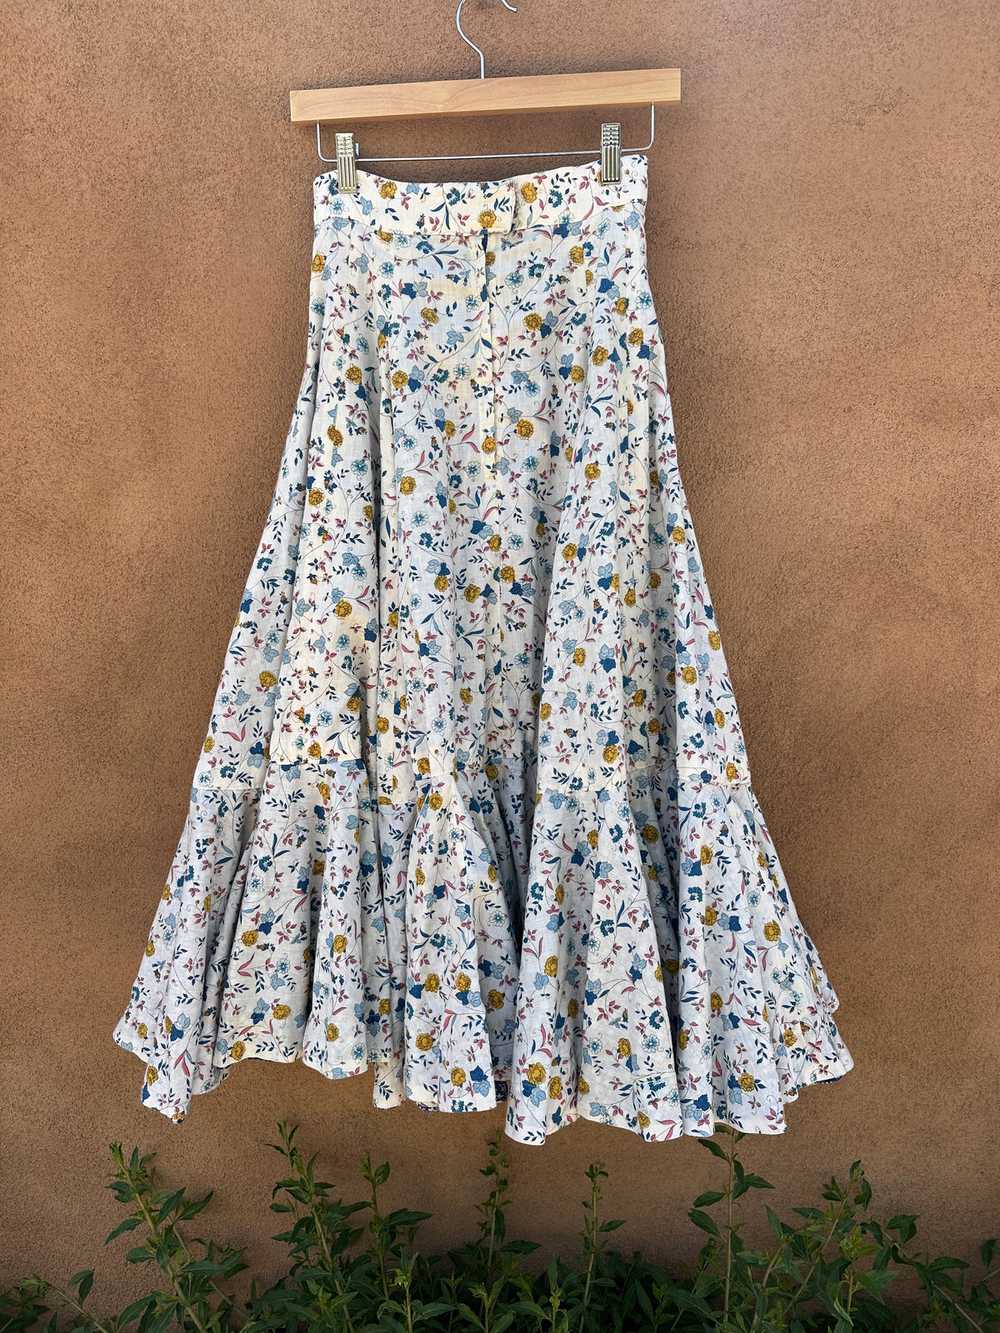 Floral Prairie Skirt - image 3